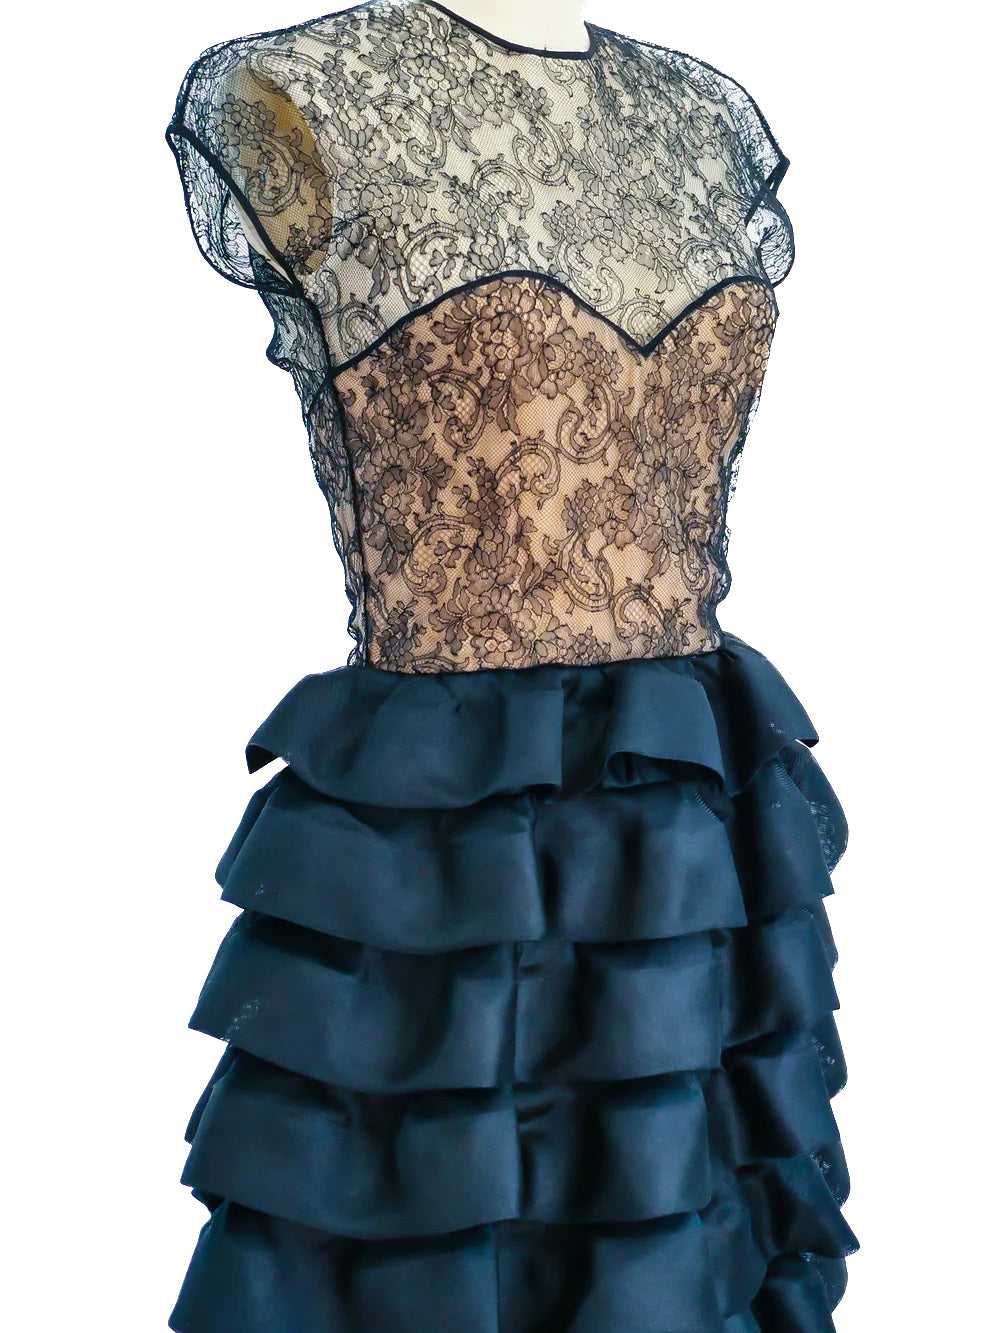 Oscar de la Renta Ruffle Lace Dress - image 2